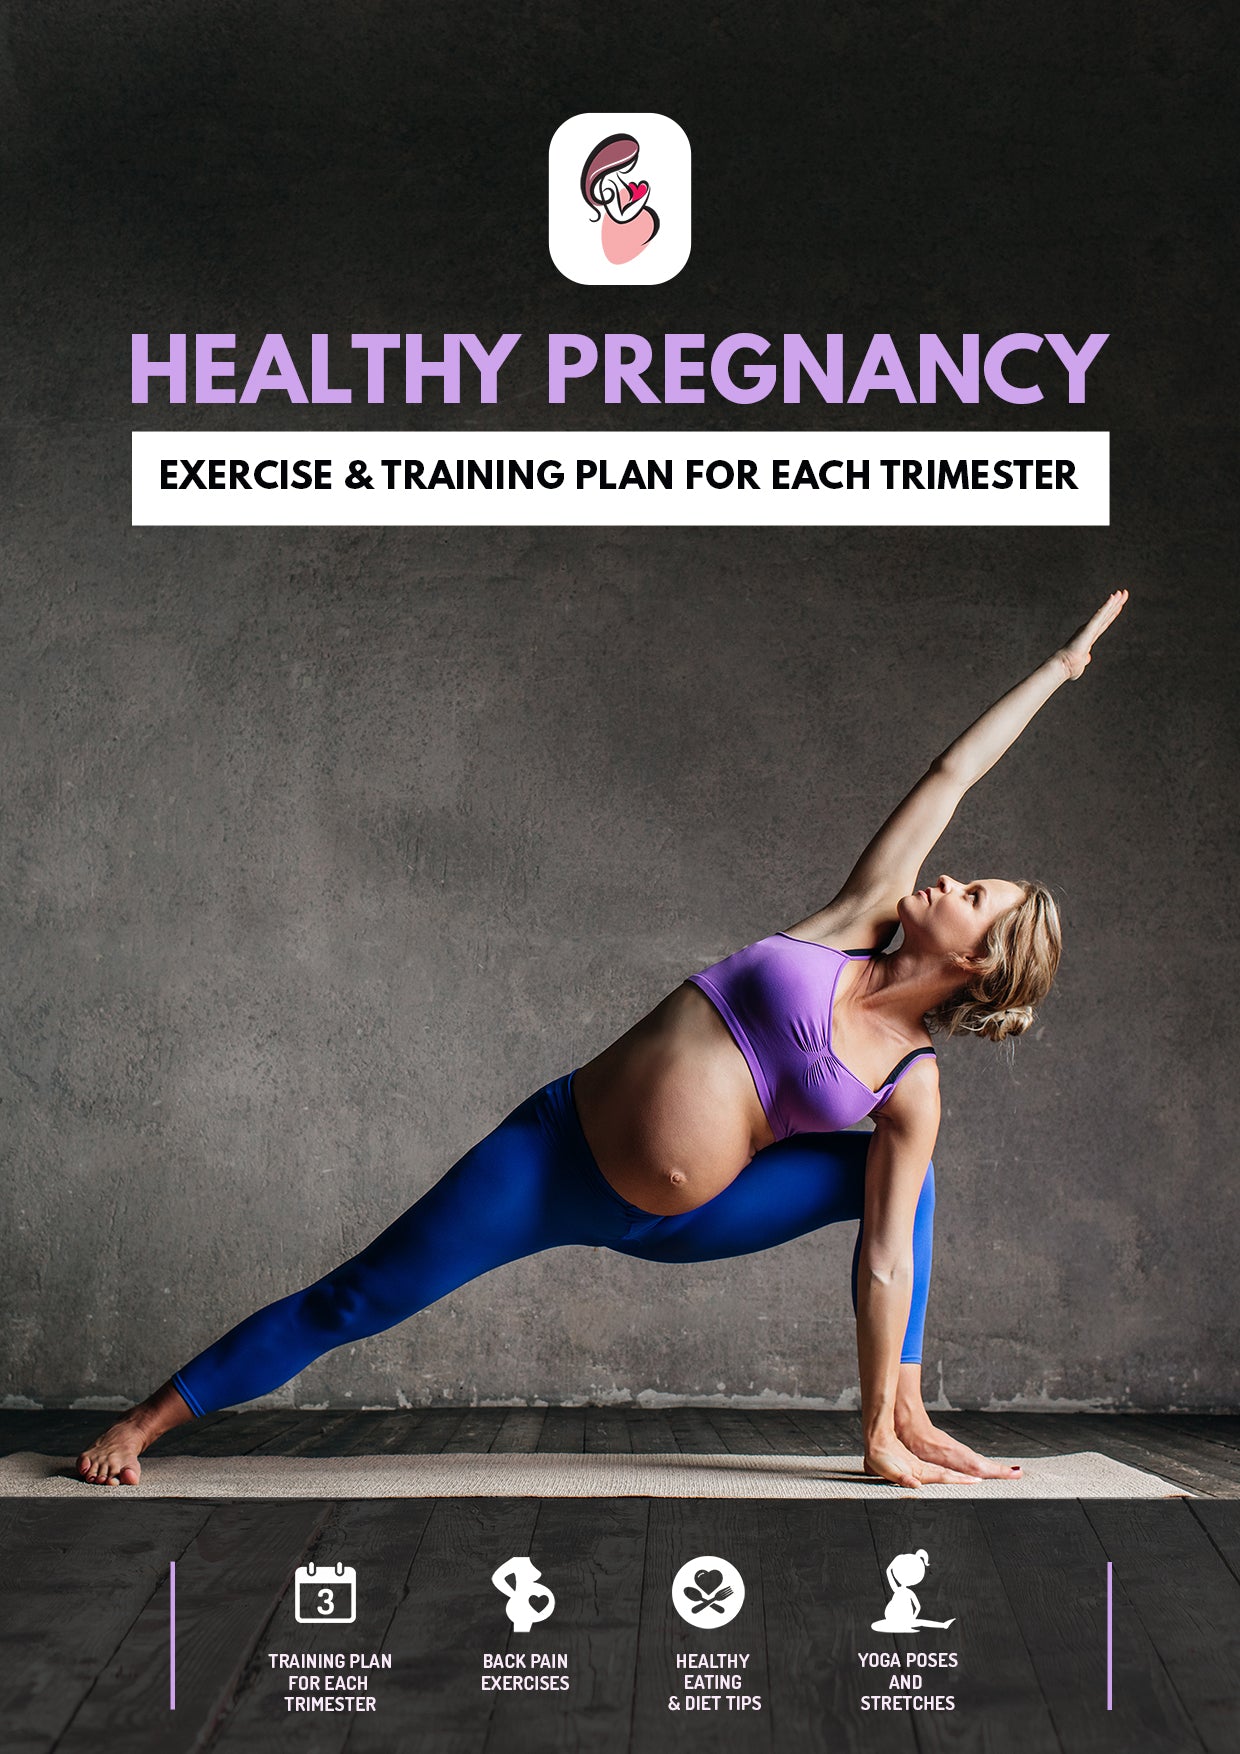 Pregnancy exercise & training plan